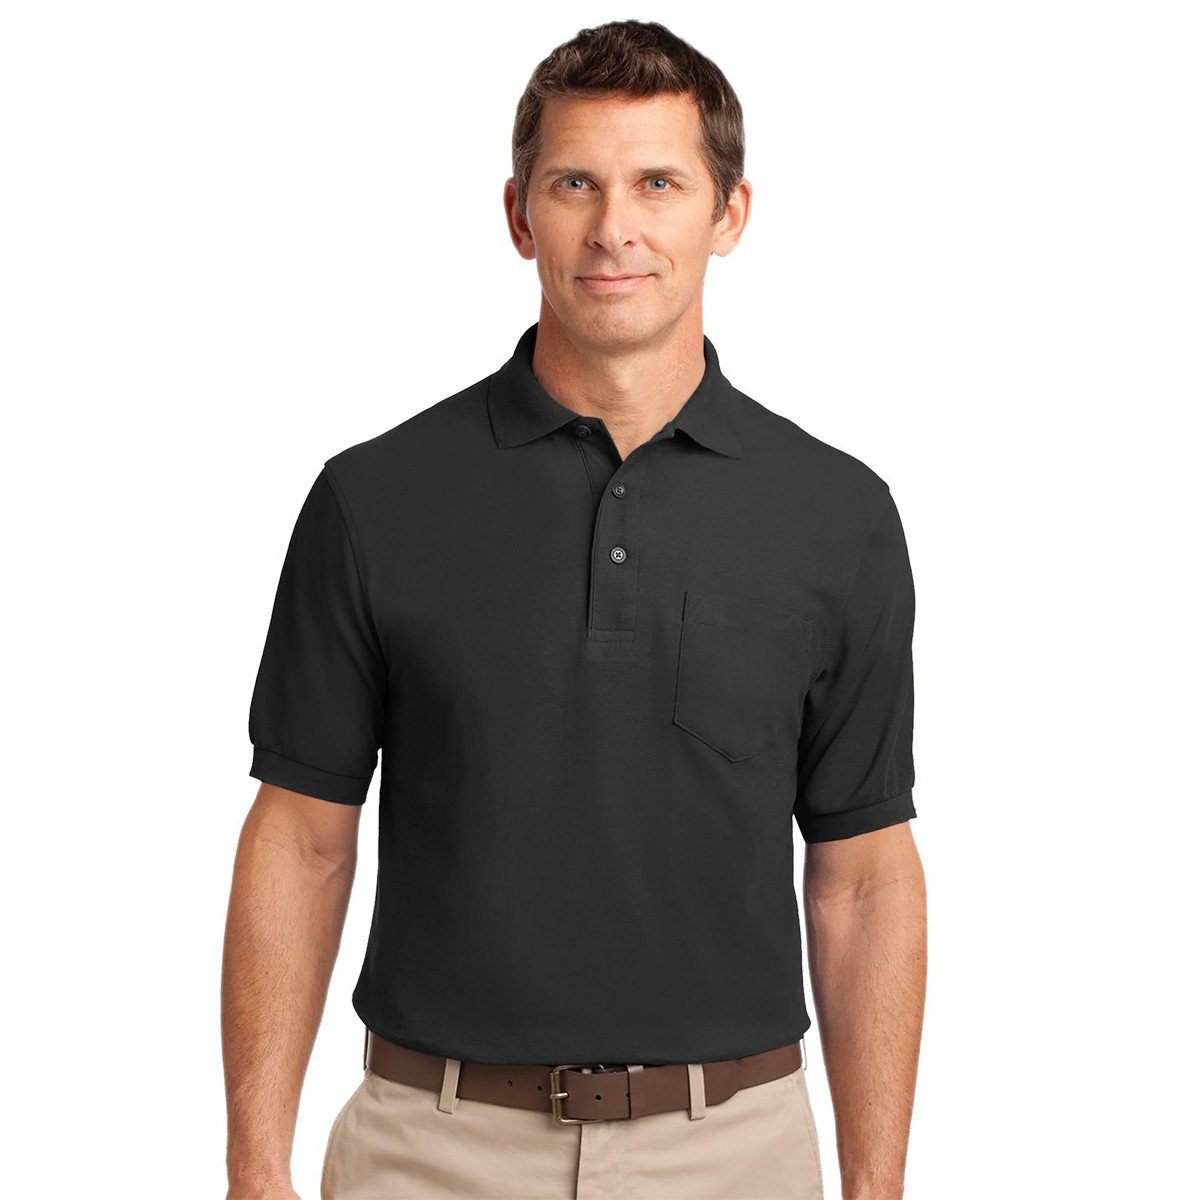 HRCK Apica Short Sleeve Polo Shirt Men's Polo Shirt Image Black S 